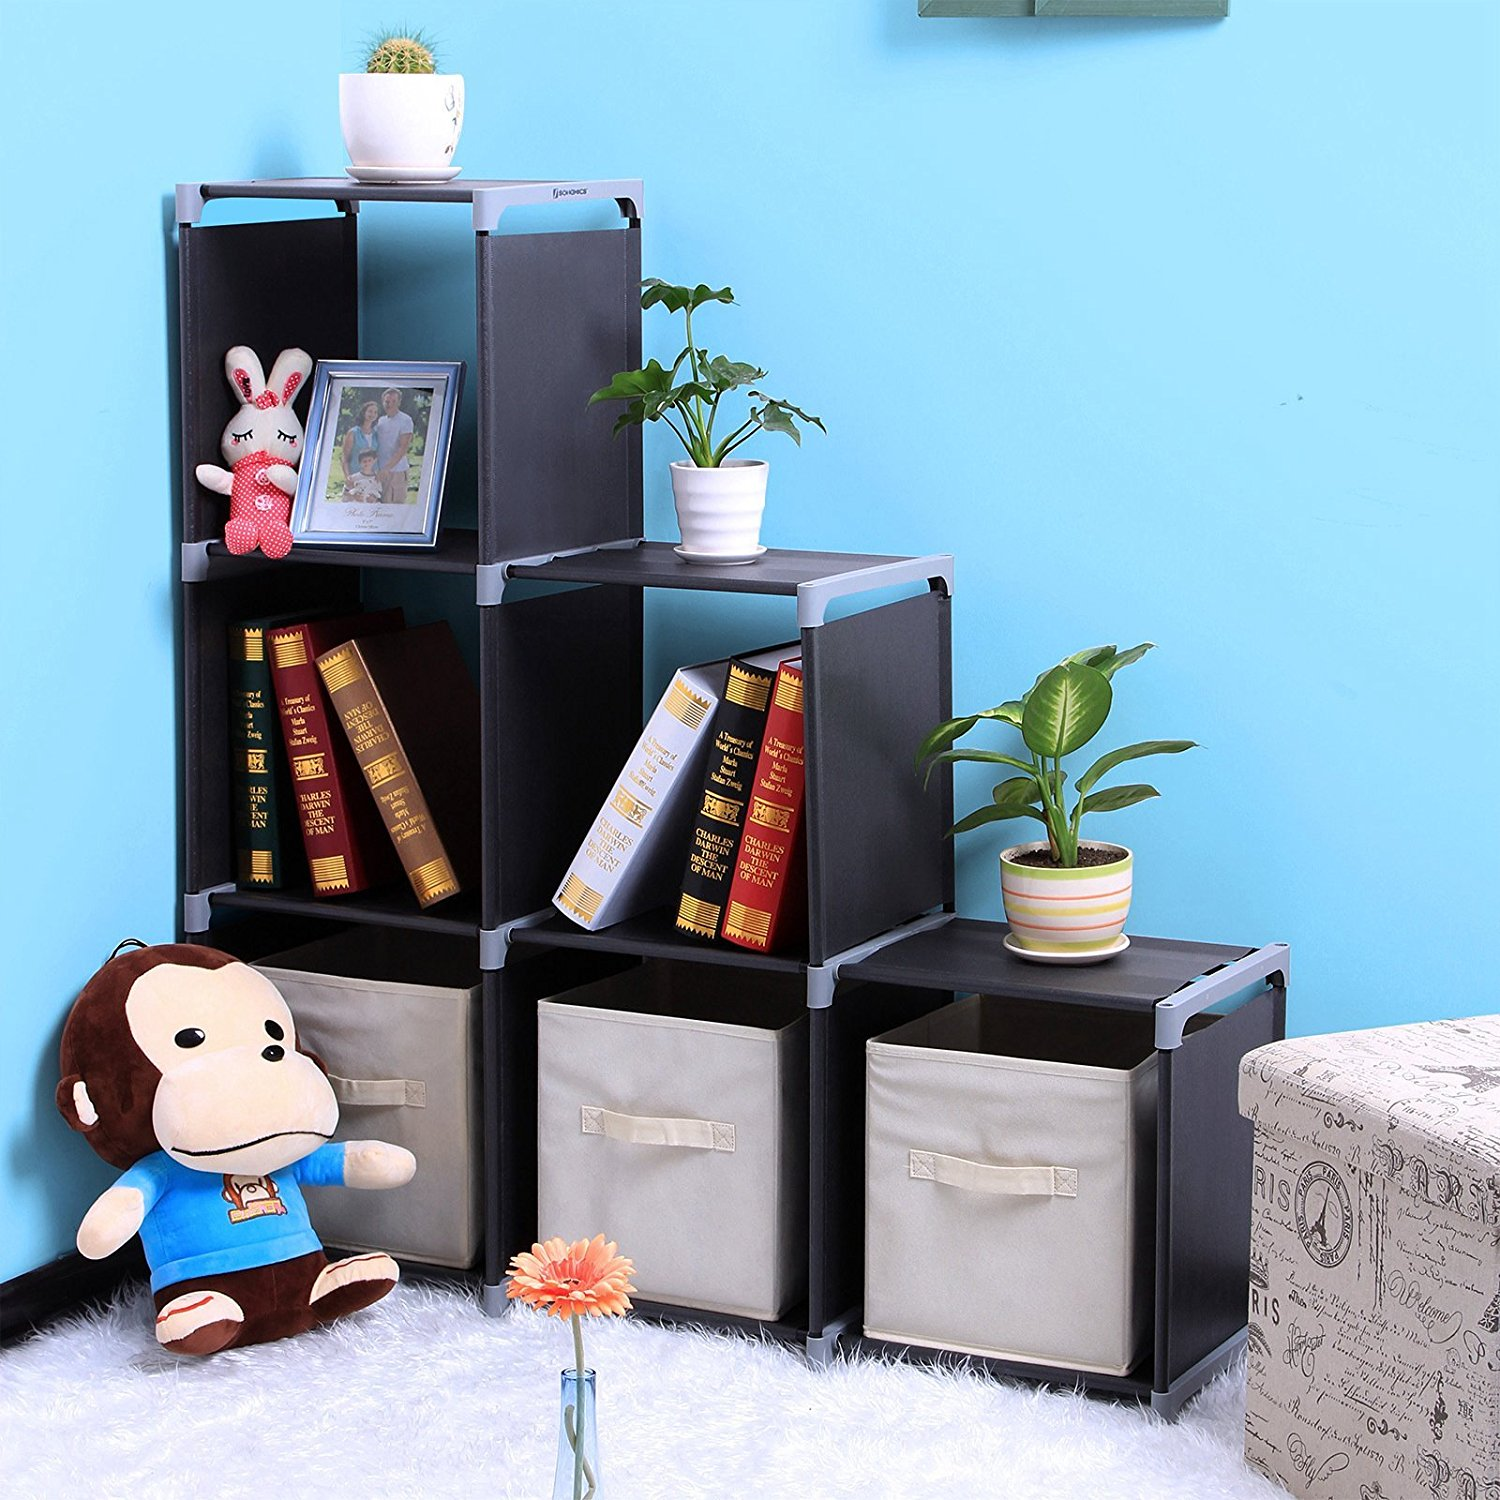 3-tier Storage Cube Closet Organizer Only $19.99 on Amazon!